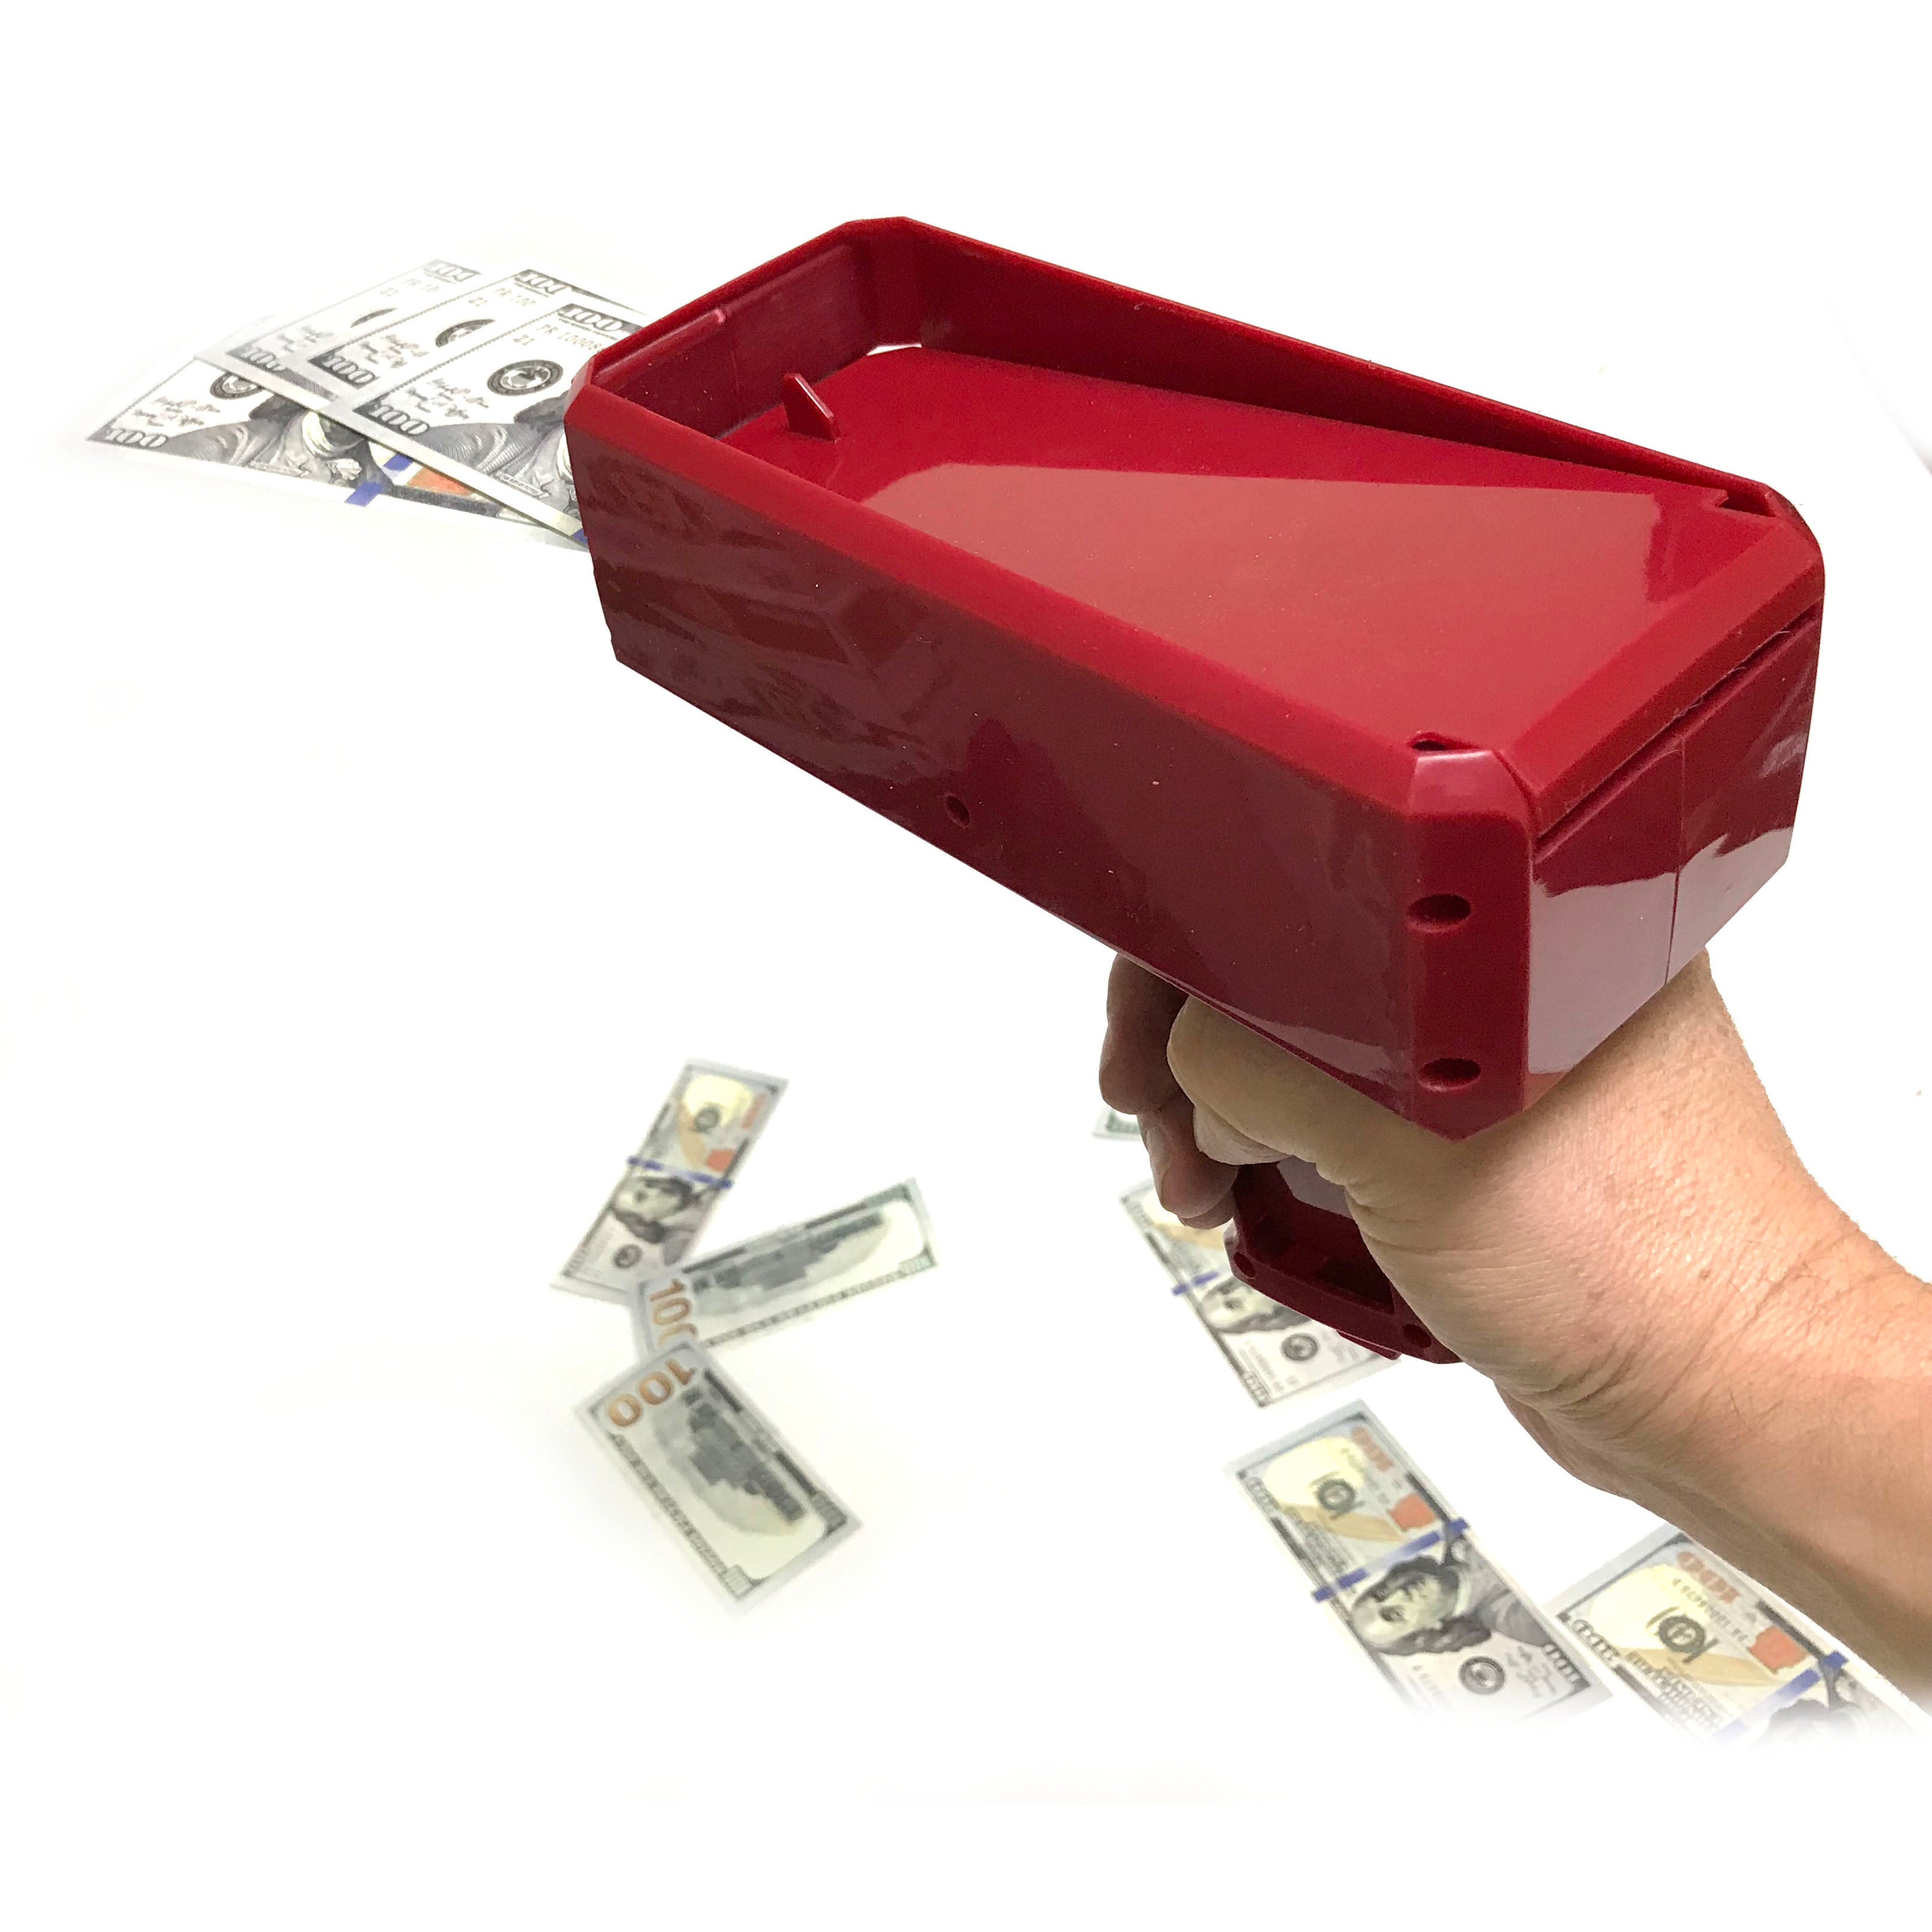 Electric Money Aerial Shooter - Make it Rain Cash, Cards or Leaflets - Cash Cannon